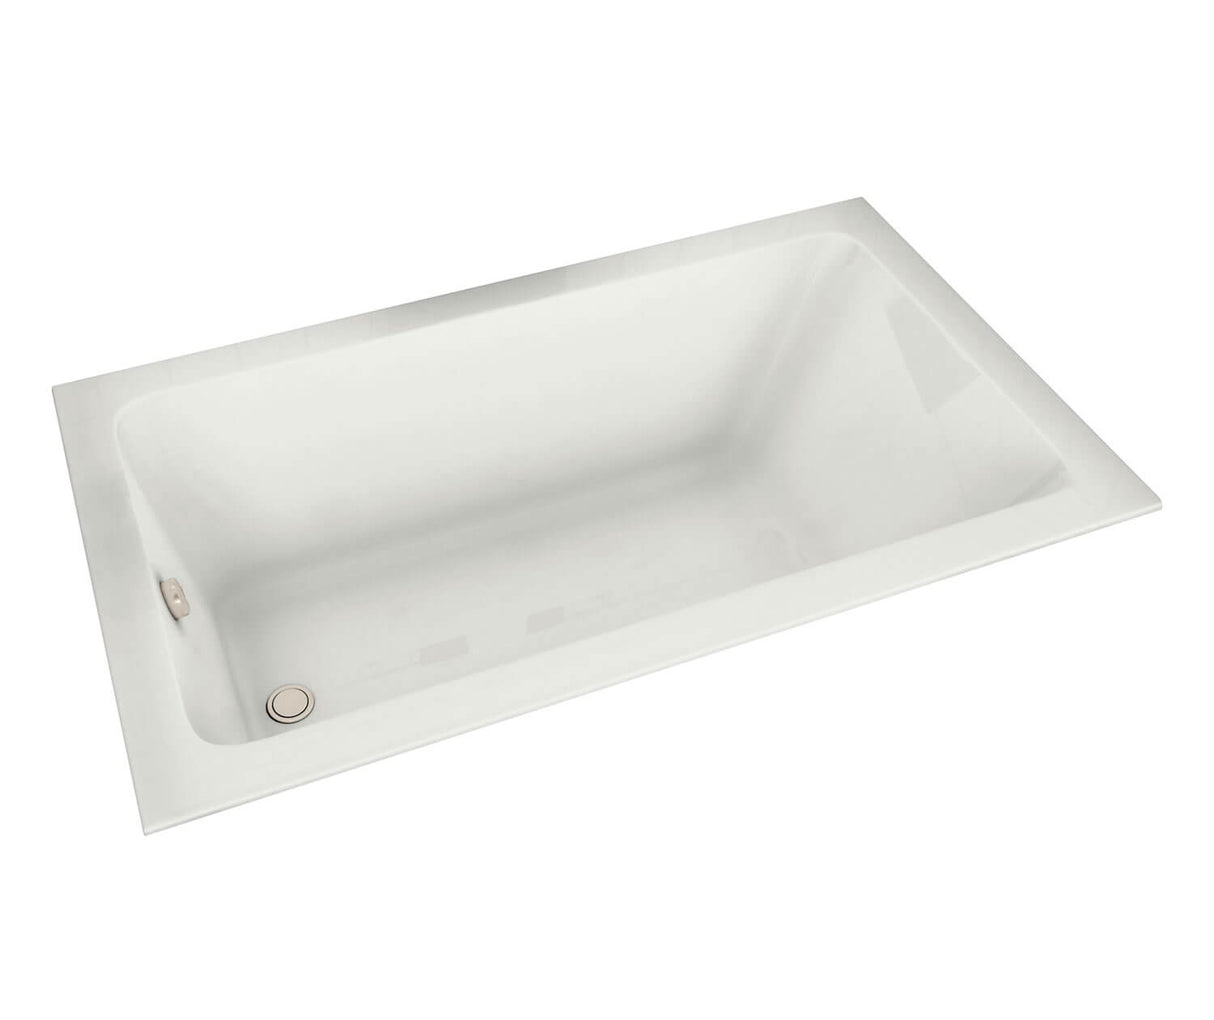 MAAX 101459-000-001-100 Pose 6636 Acrylic Drop-in End Drain Bathtub in White